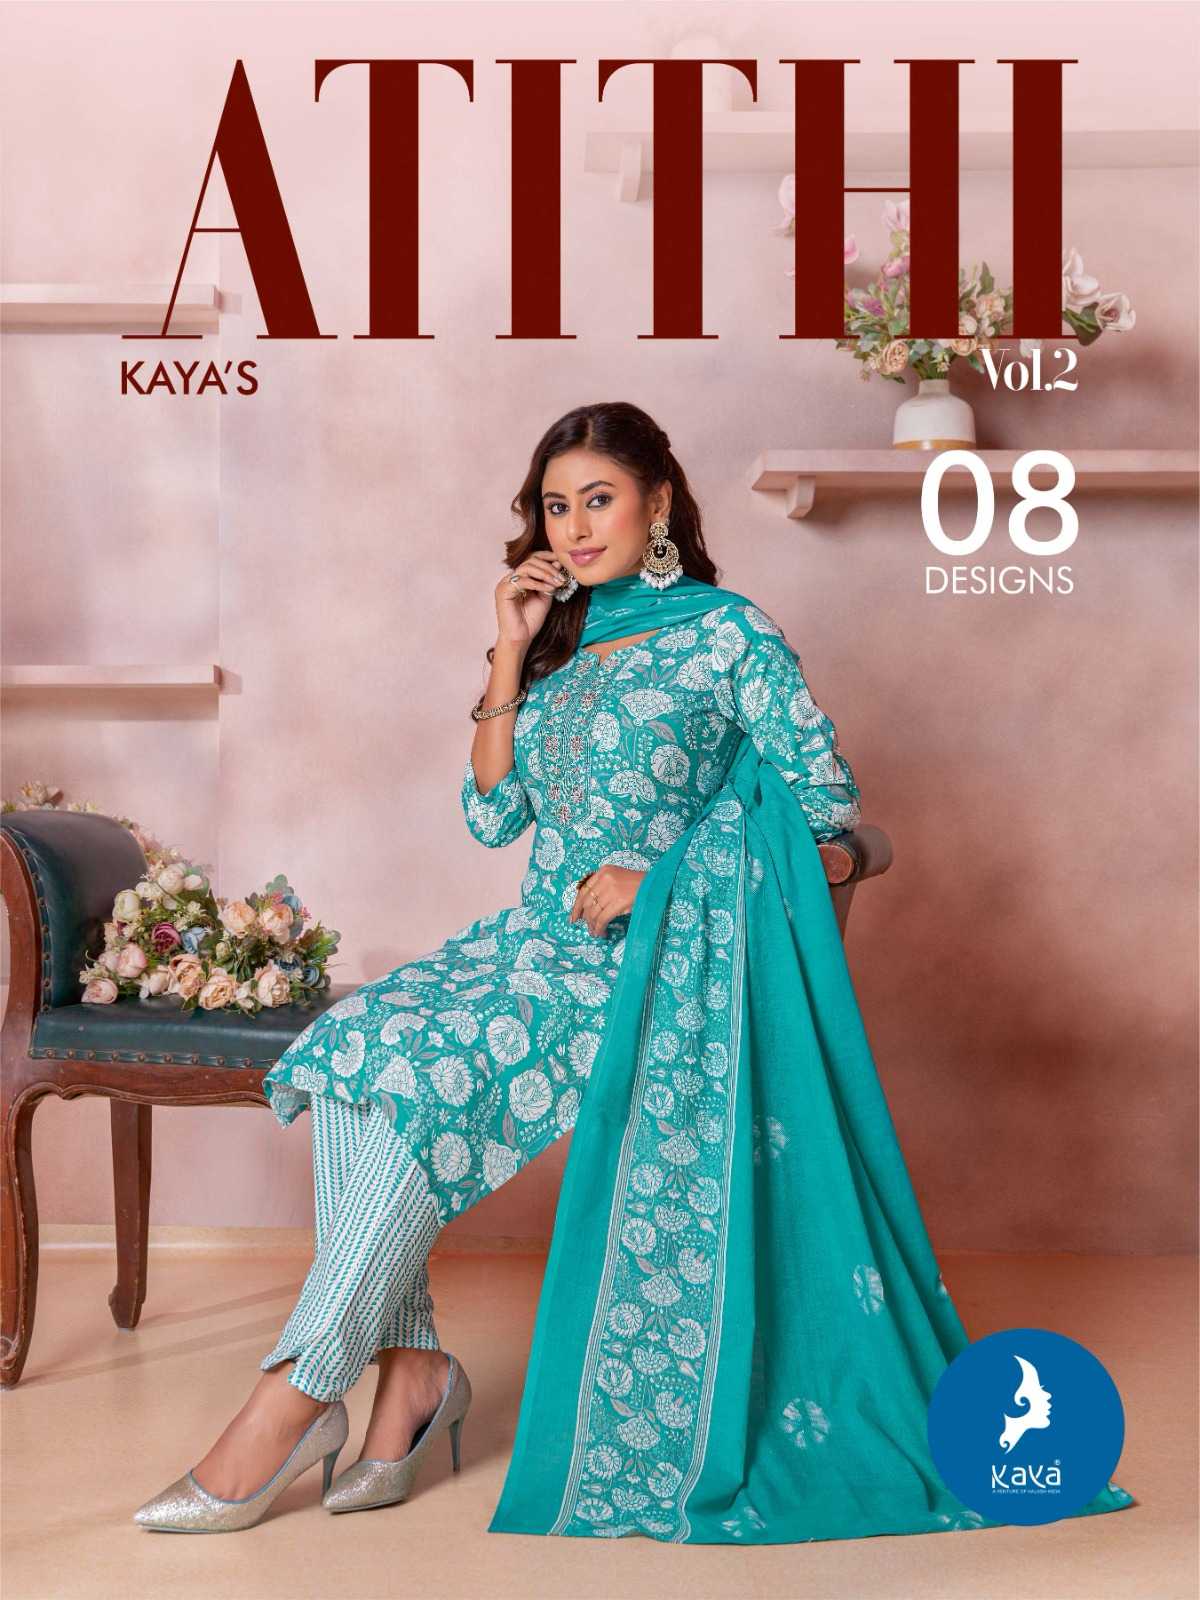 atithi vol 2 by kaya full stitch super hit design cotton print straight cut salwar suit 